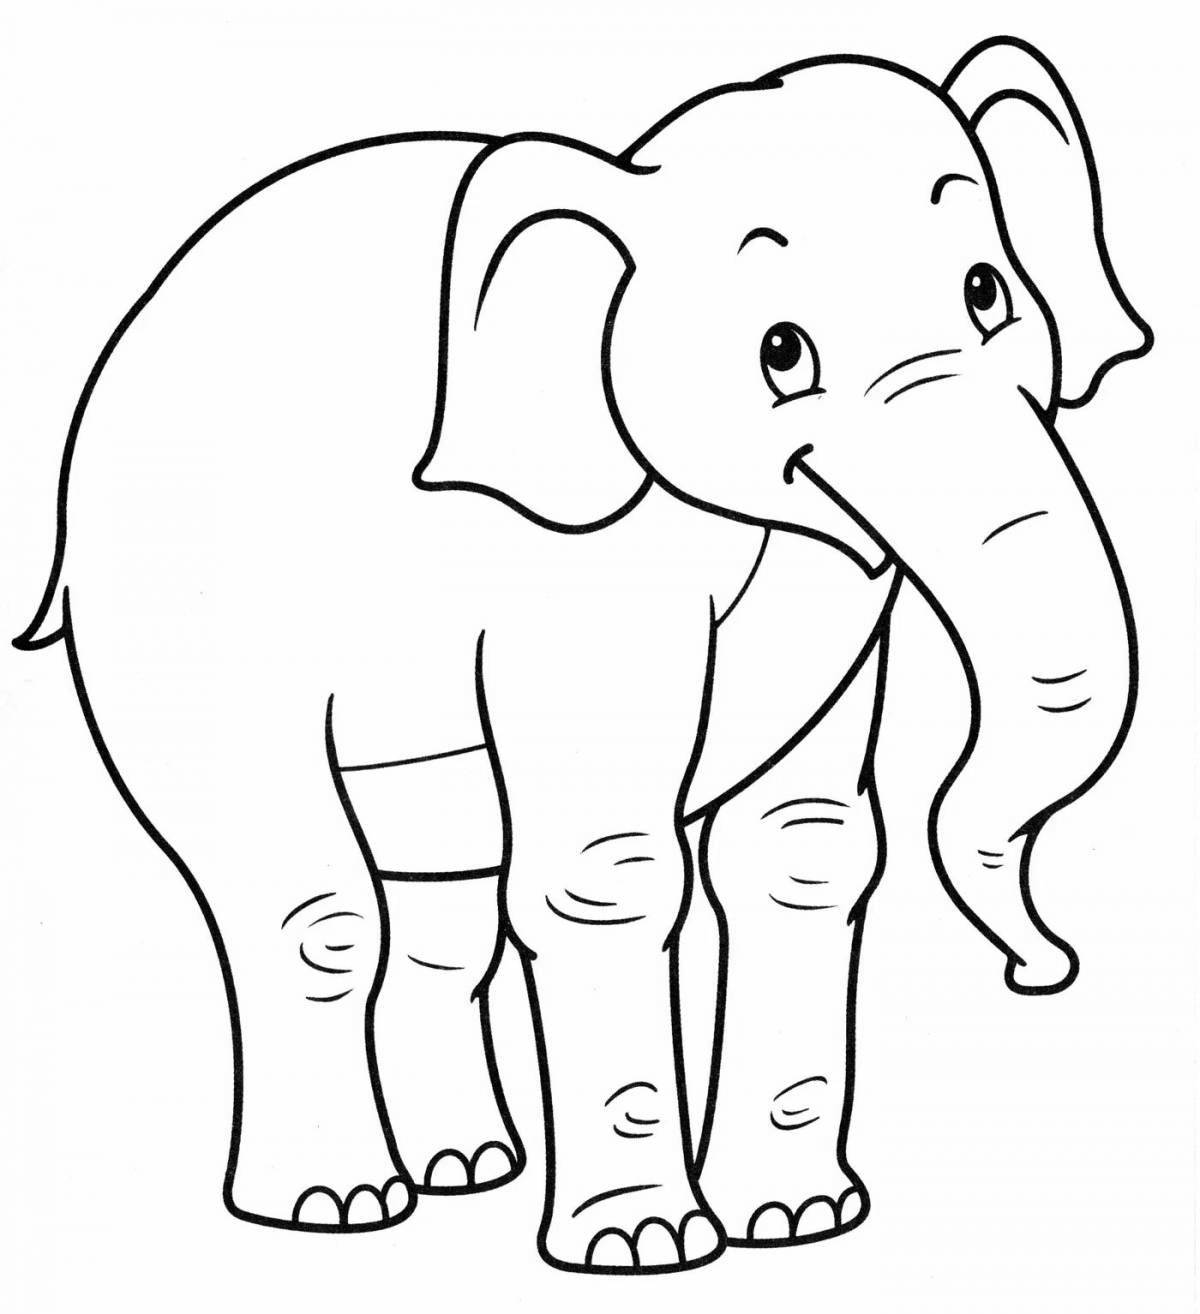 Fantastic elephant coloring book for kids